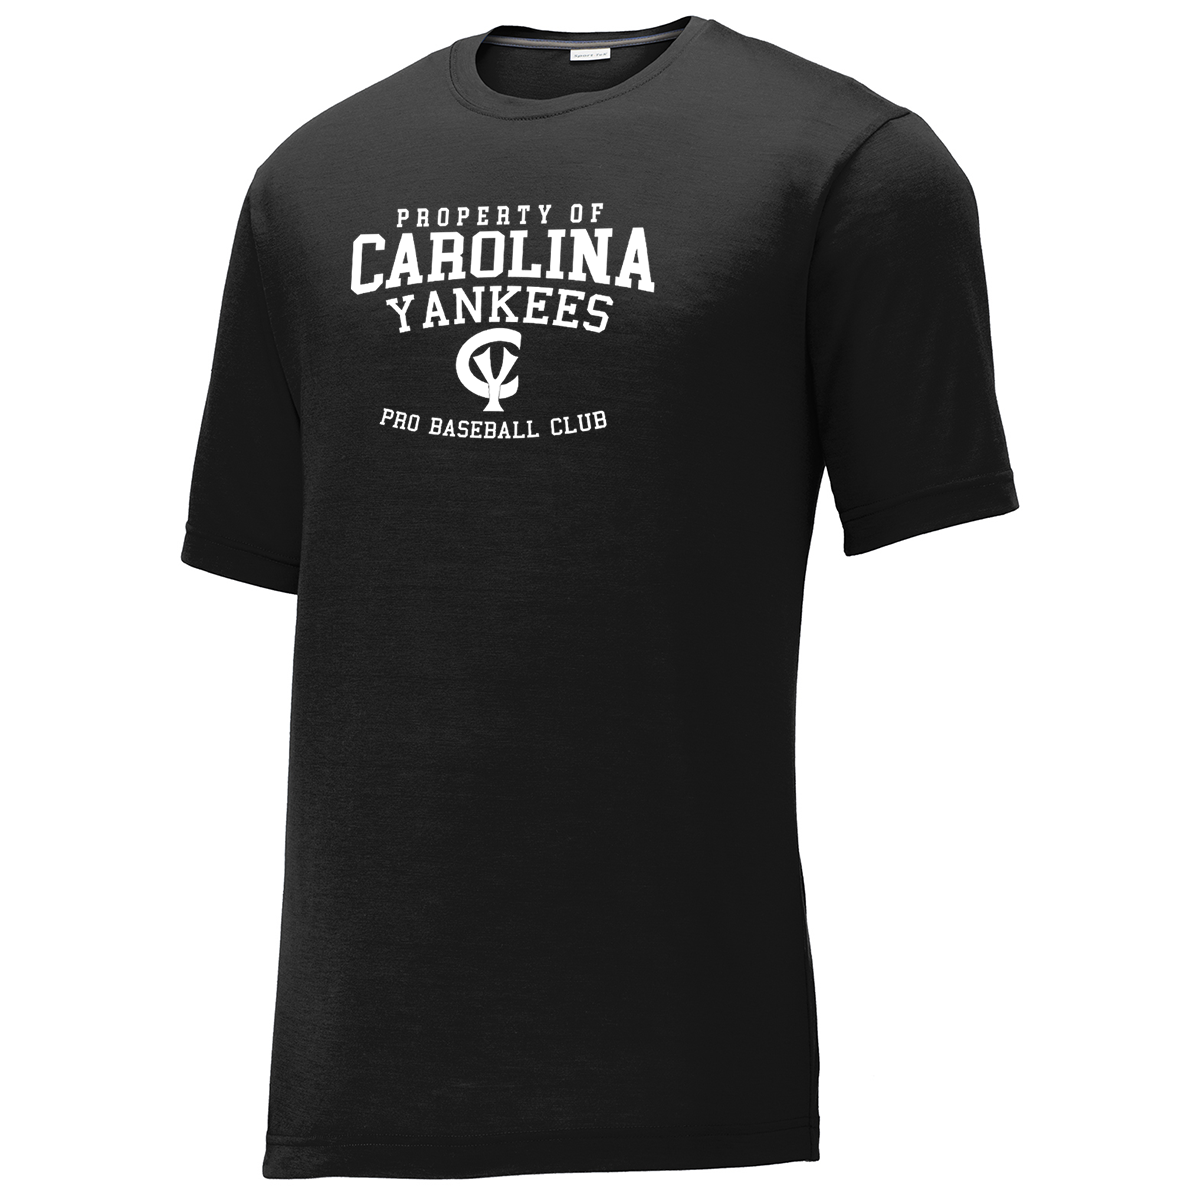 South Carolina Yankees CottonTouch Performance T-Shirt